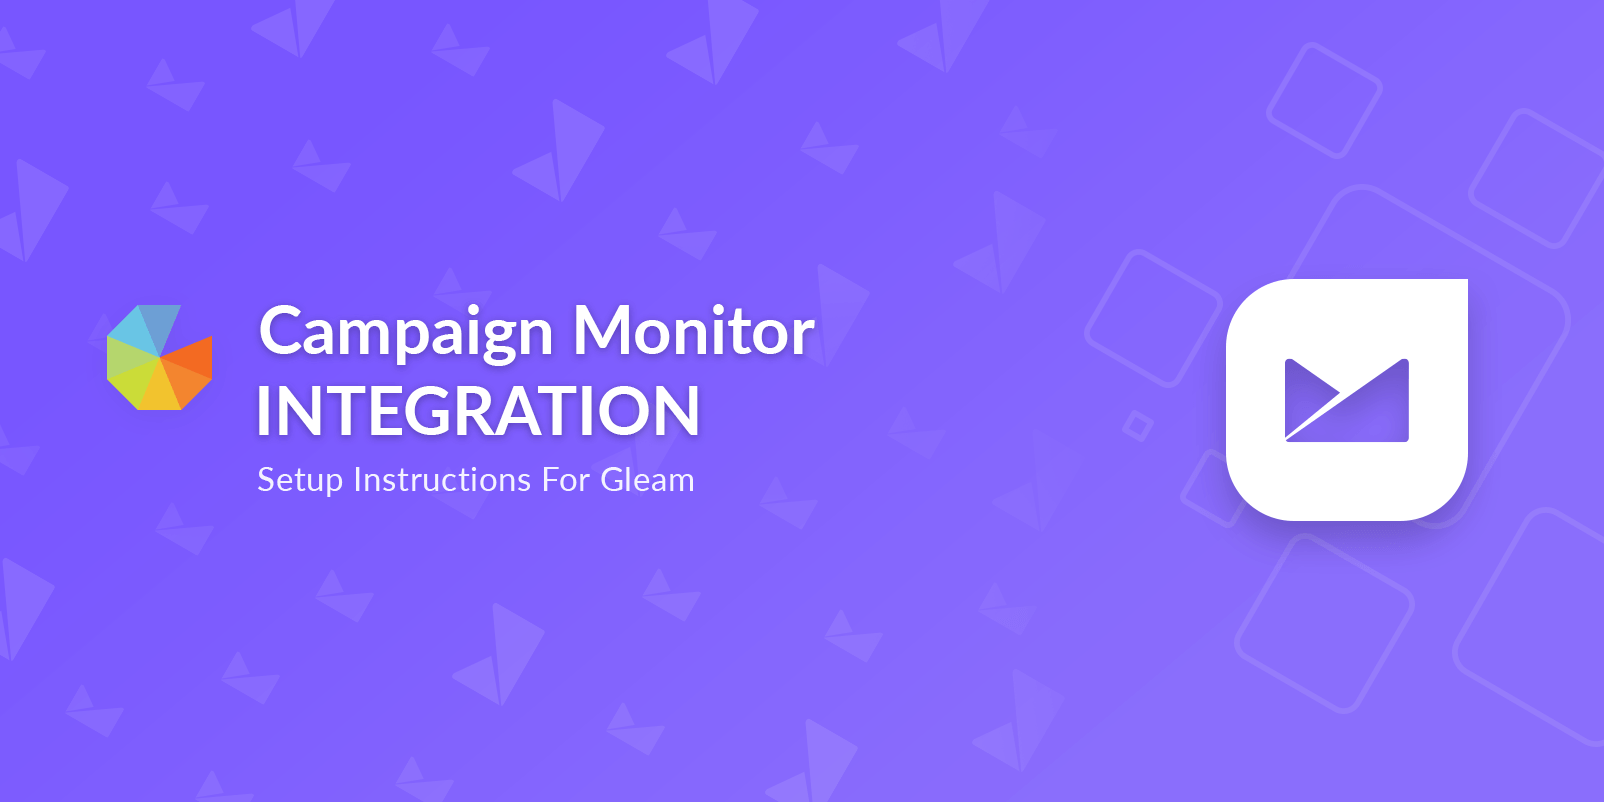 Campaign monitor intergration setup intructions for Gleam